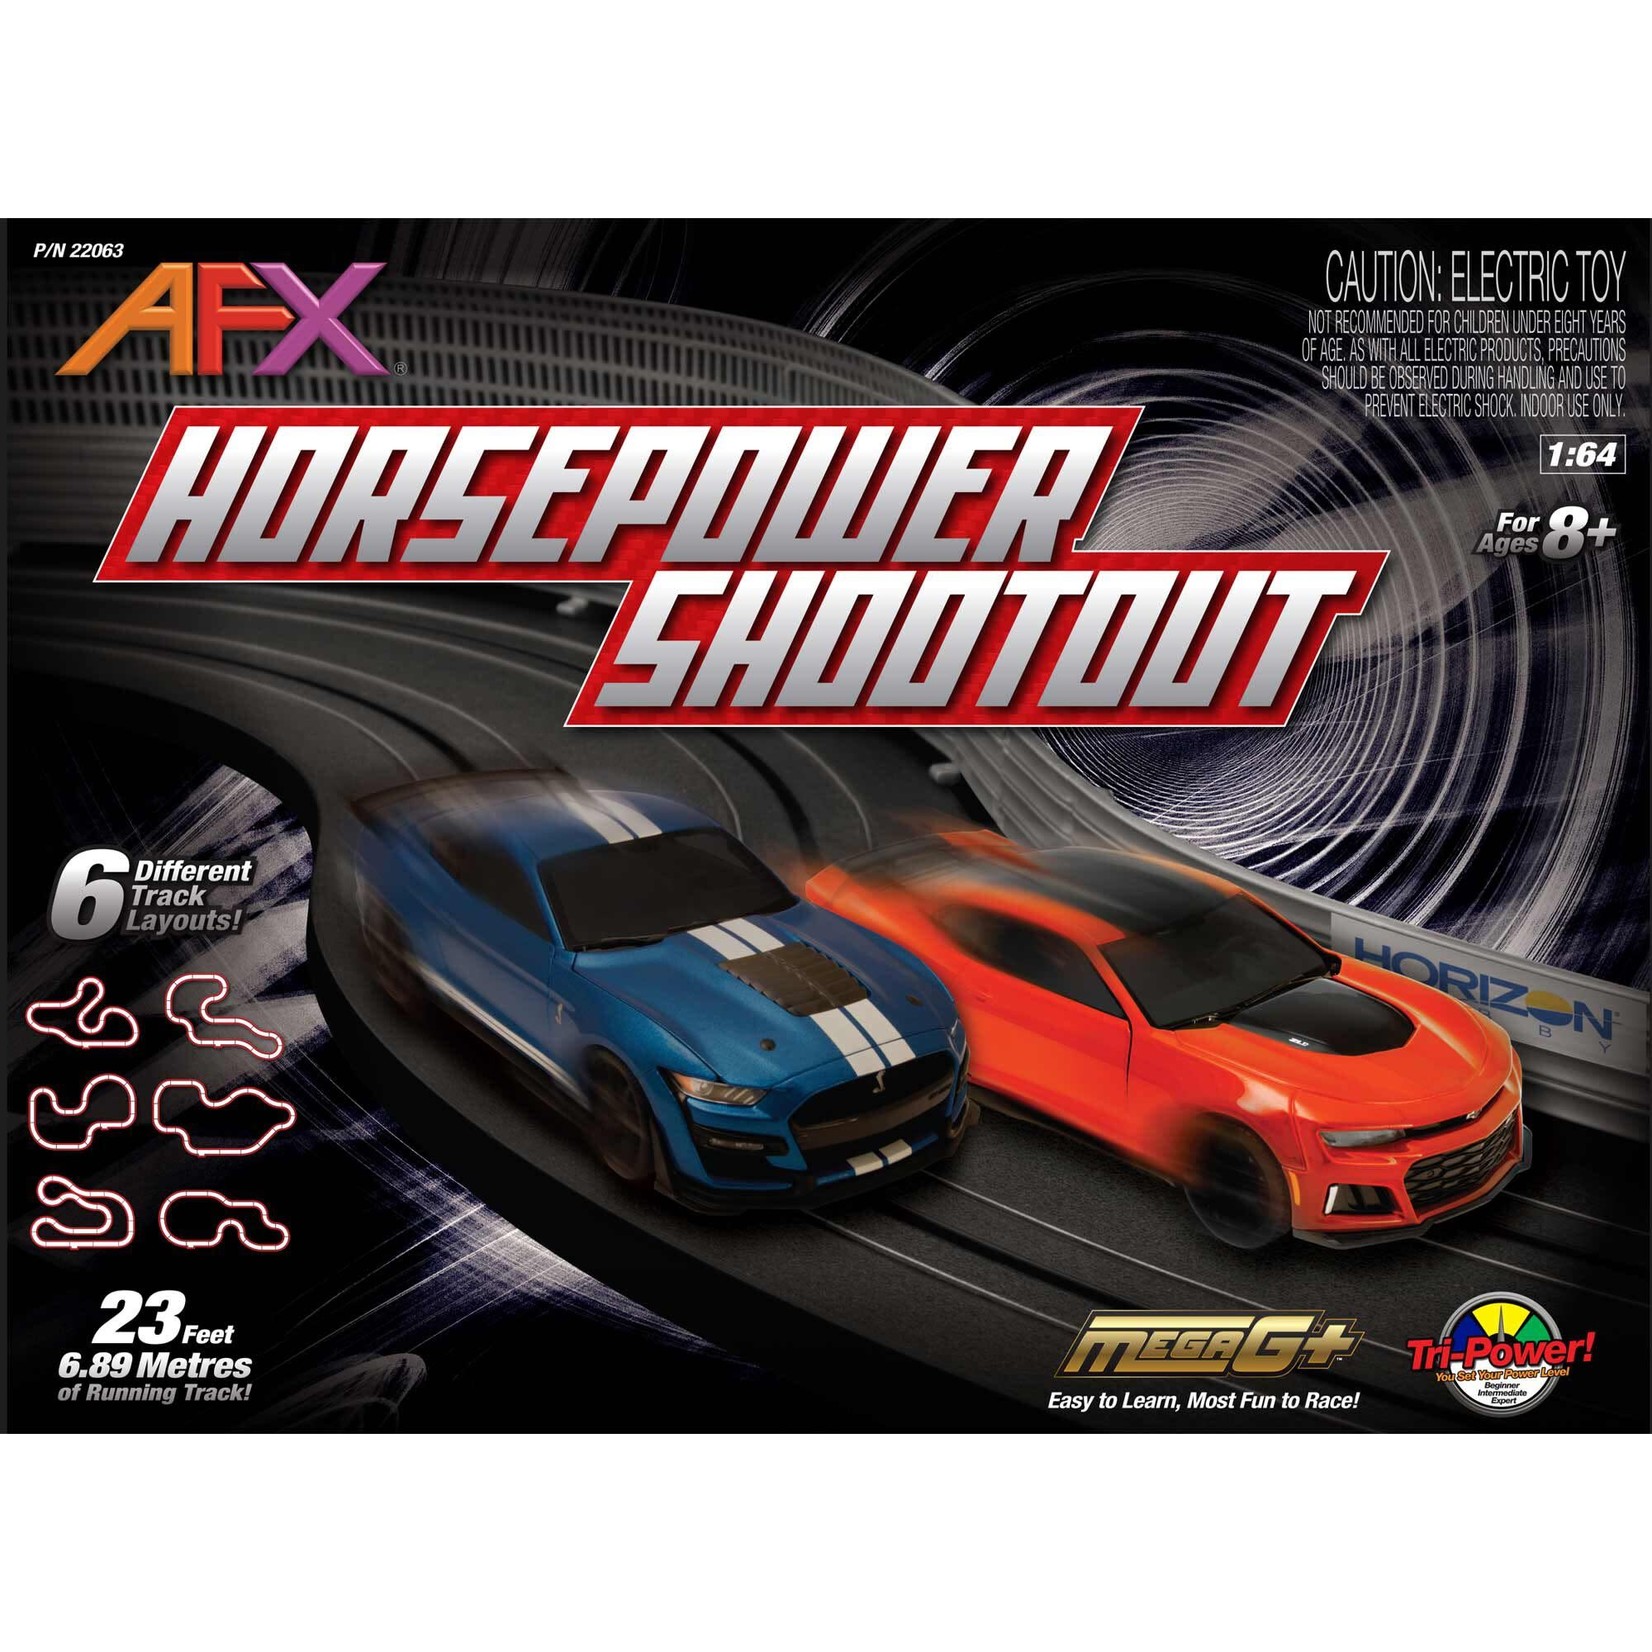 AFX Horsepower Shootout Set (Limited Edition) #22063